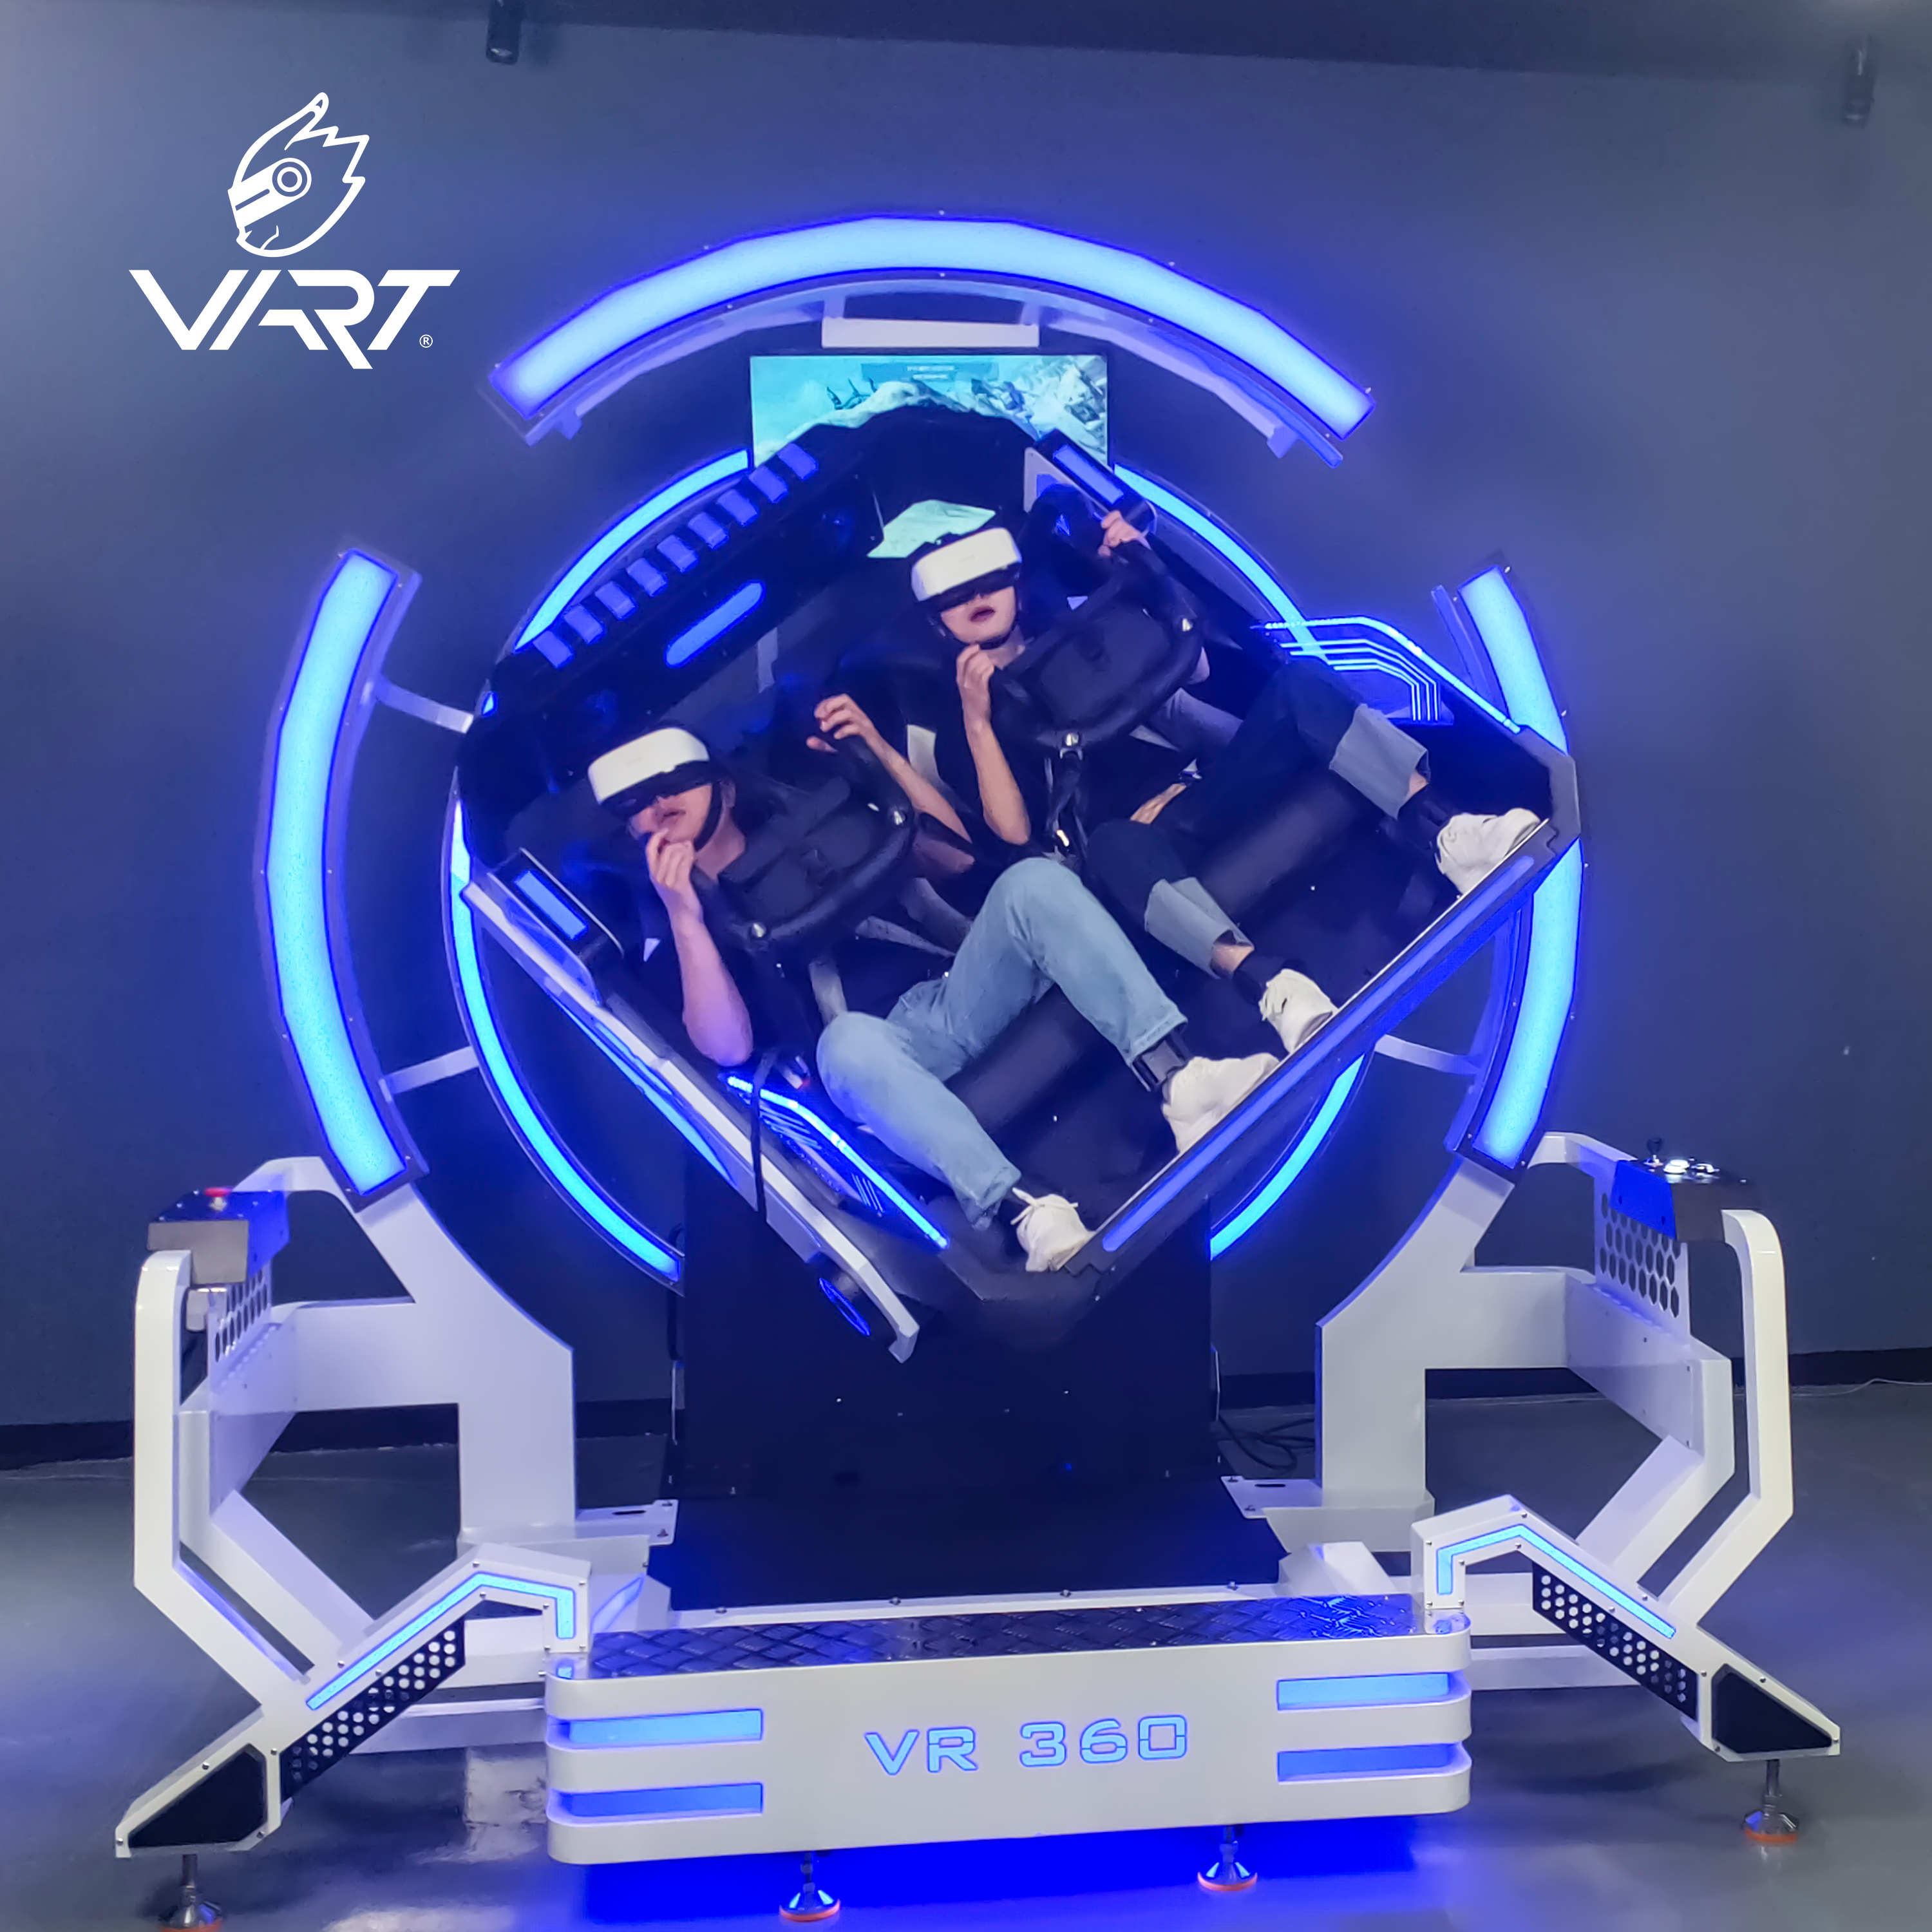 Lav pris for 9d Vr 360 Degree Headtracking Roller Coaster Simulator Plus Virtual Reality Vibration 9d Cinema